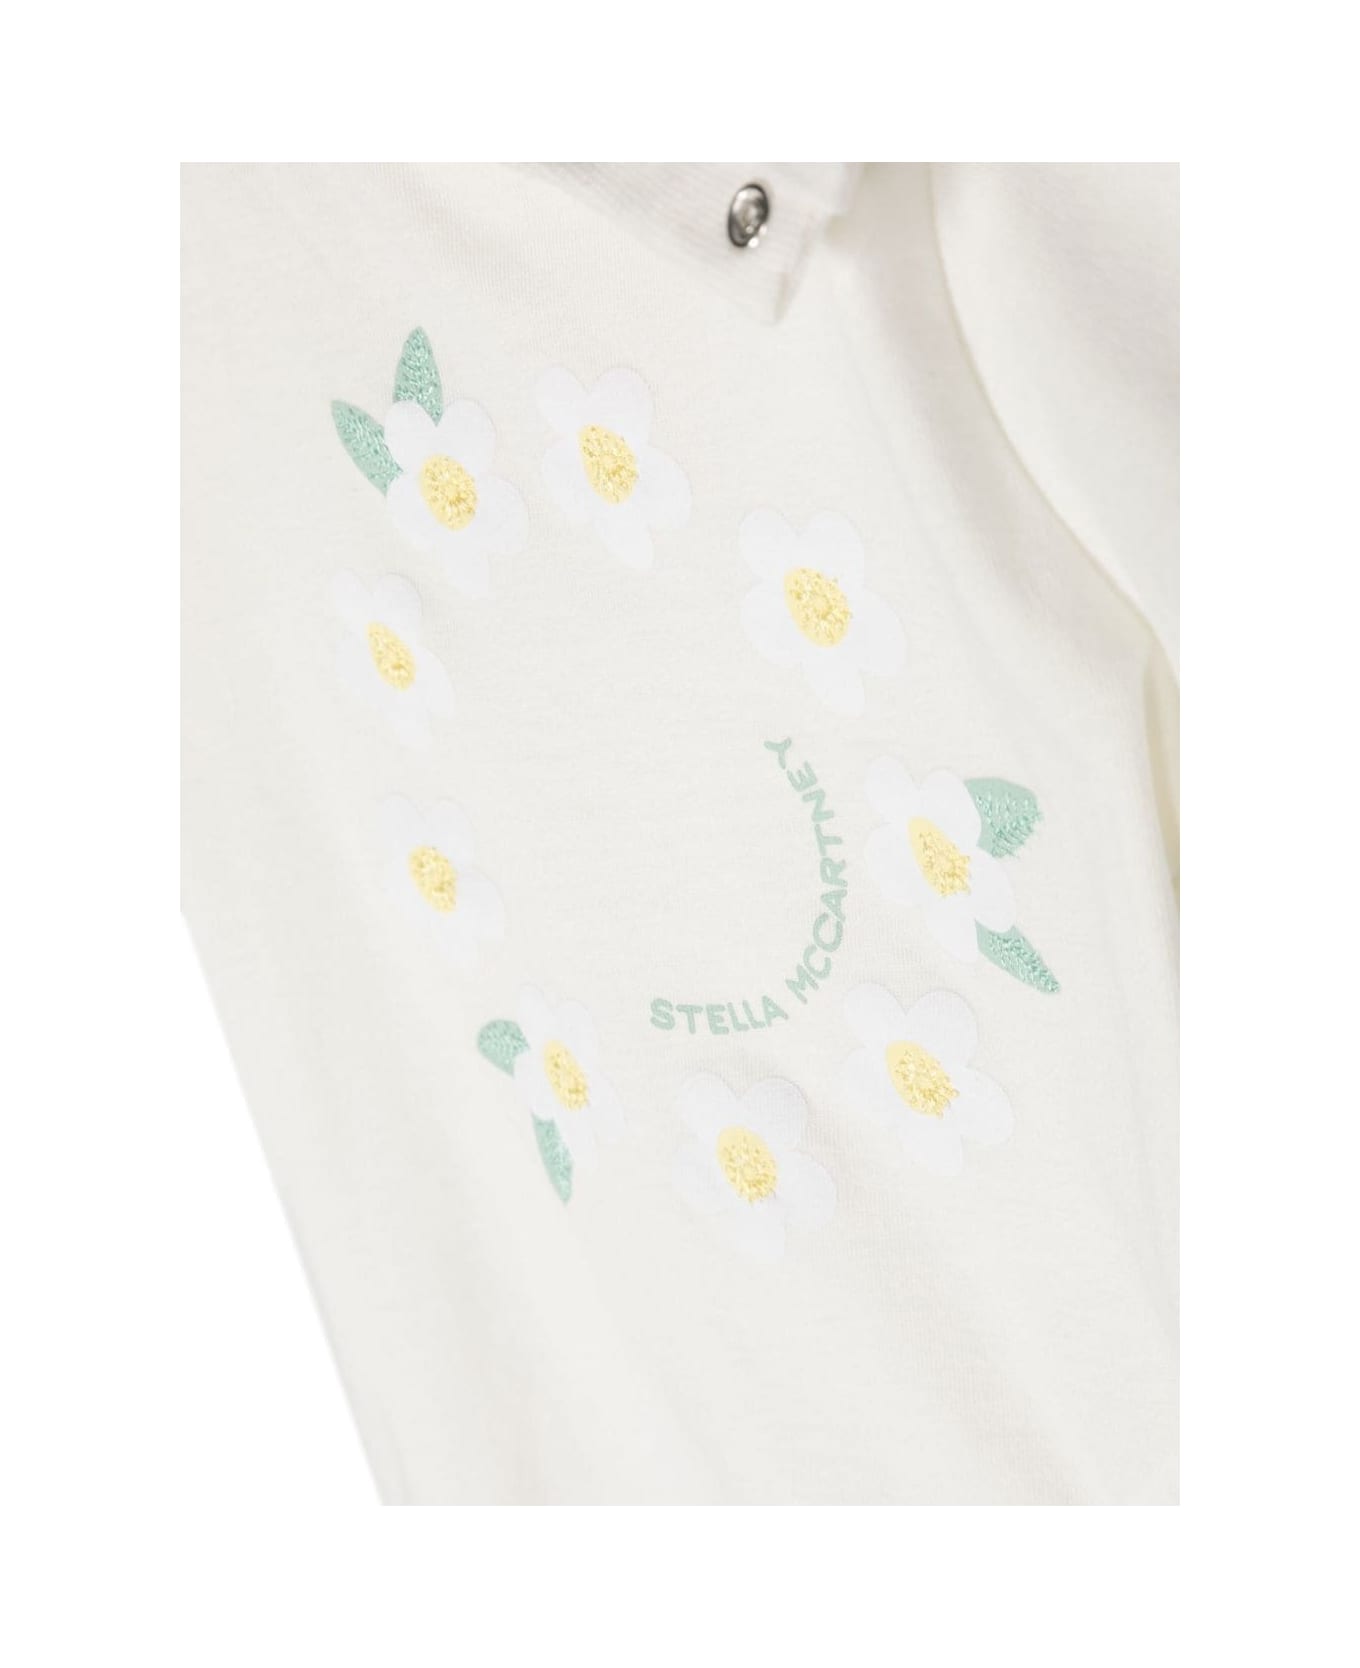 Stella McCartney Kids Crewneck T-shirt With Daisy Print In White Cotton Baby Girl - White